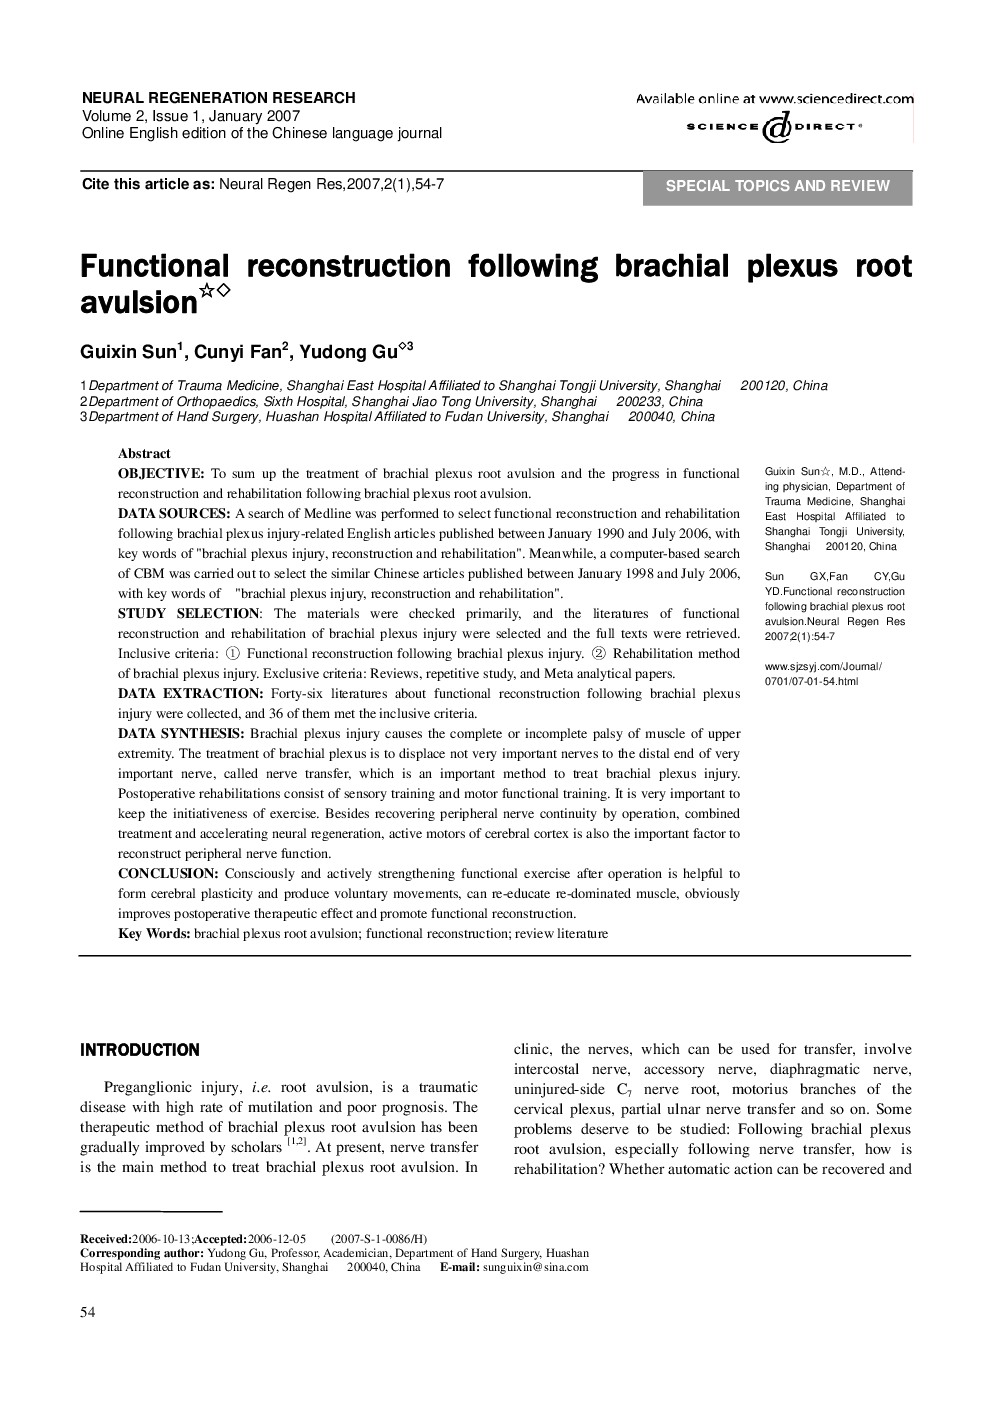 Functional reconstruction following brachial plexus root avulsion